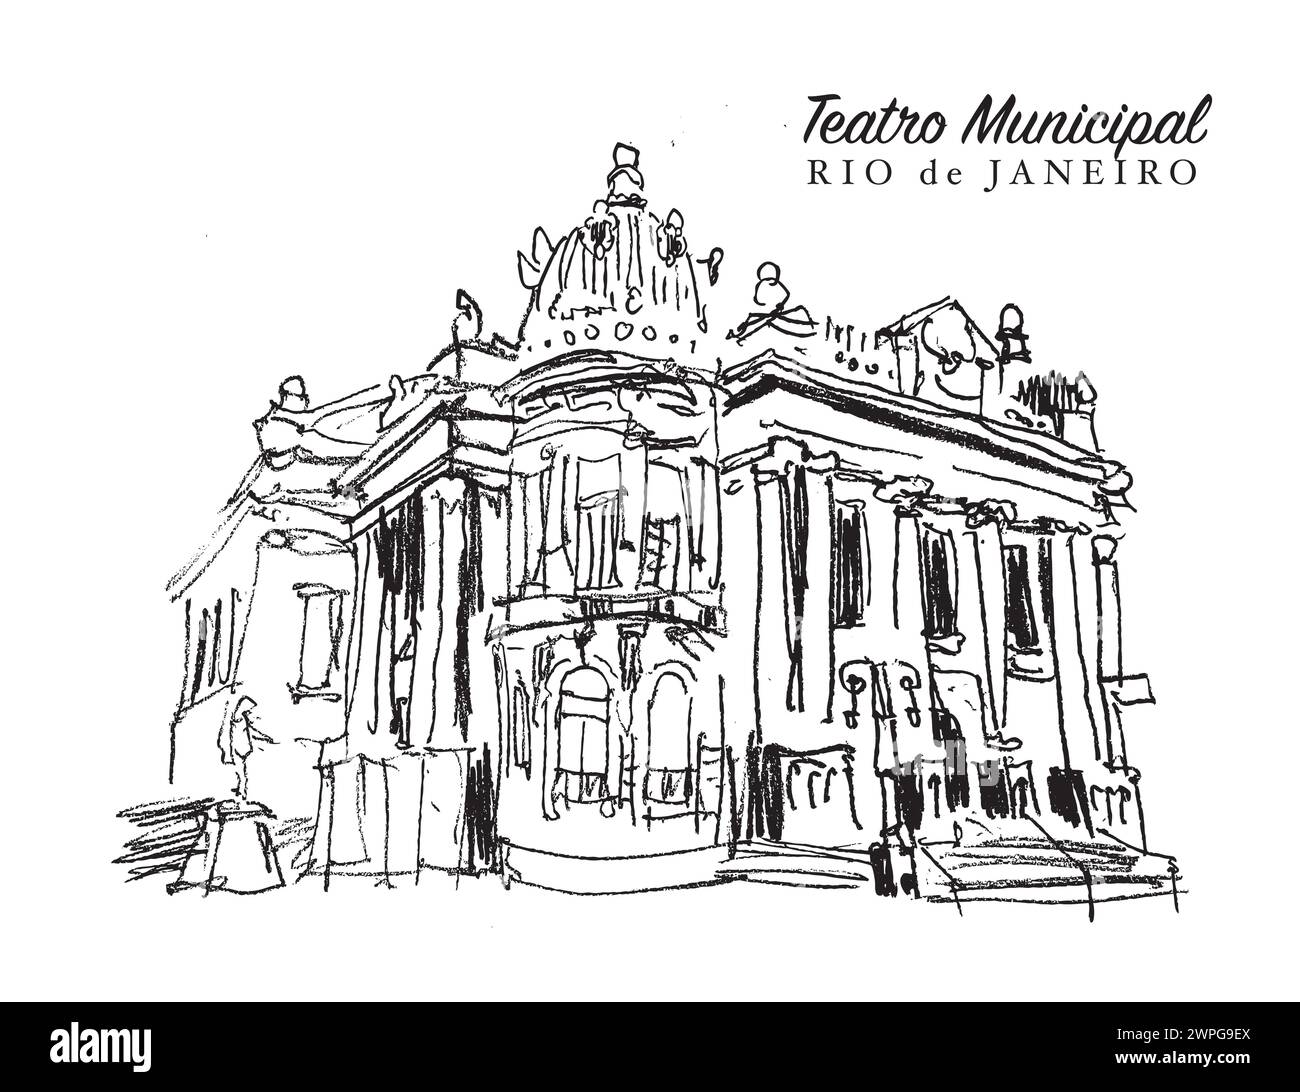 Vector hand drawn sketch illustration of the Municipal Theater of Rio de Janeiro, Brazil Stock Vector